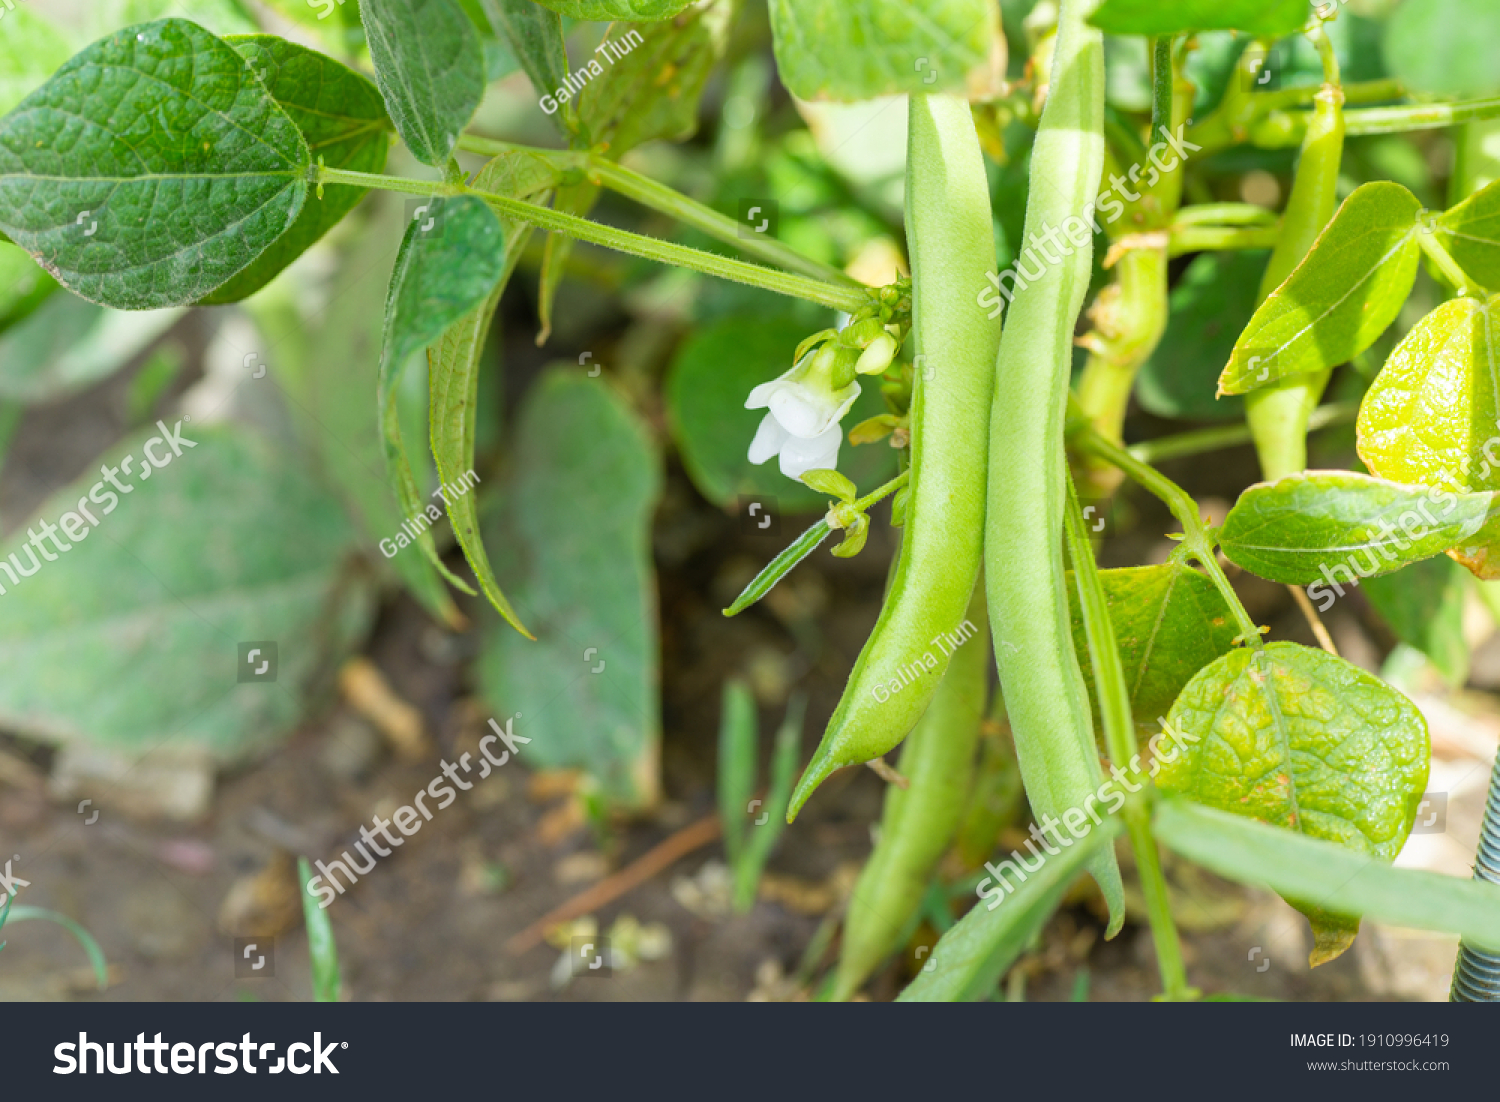 441,729 Bean plant Images, Stock Photos & Vectors | Shutterstock